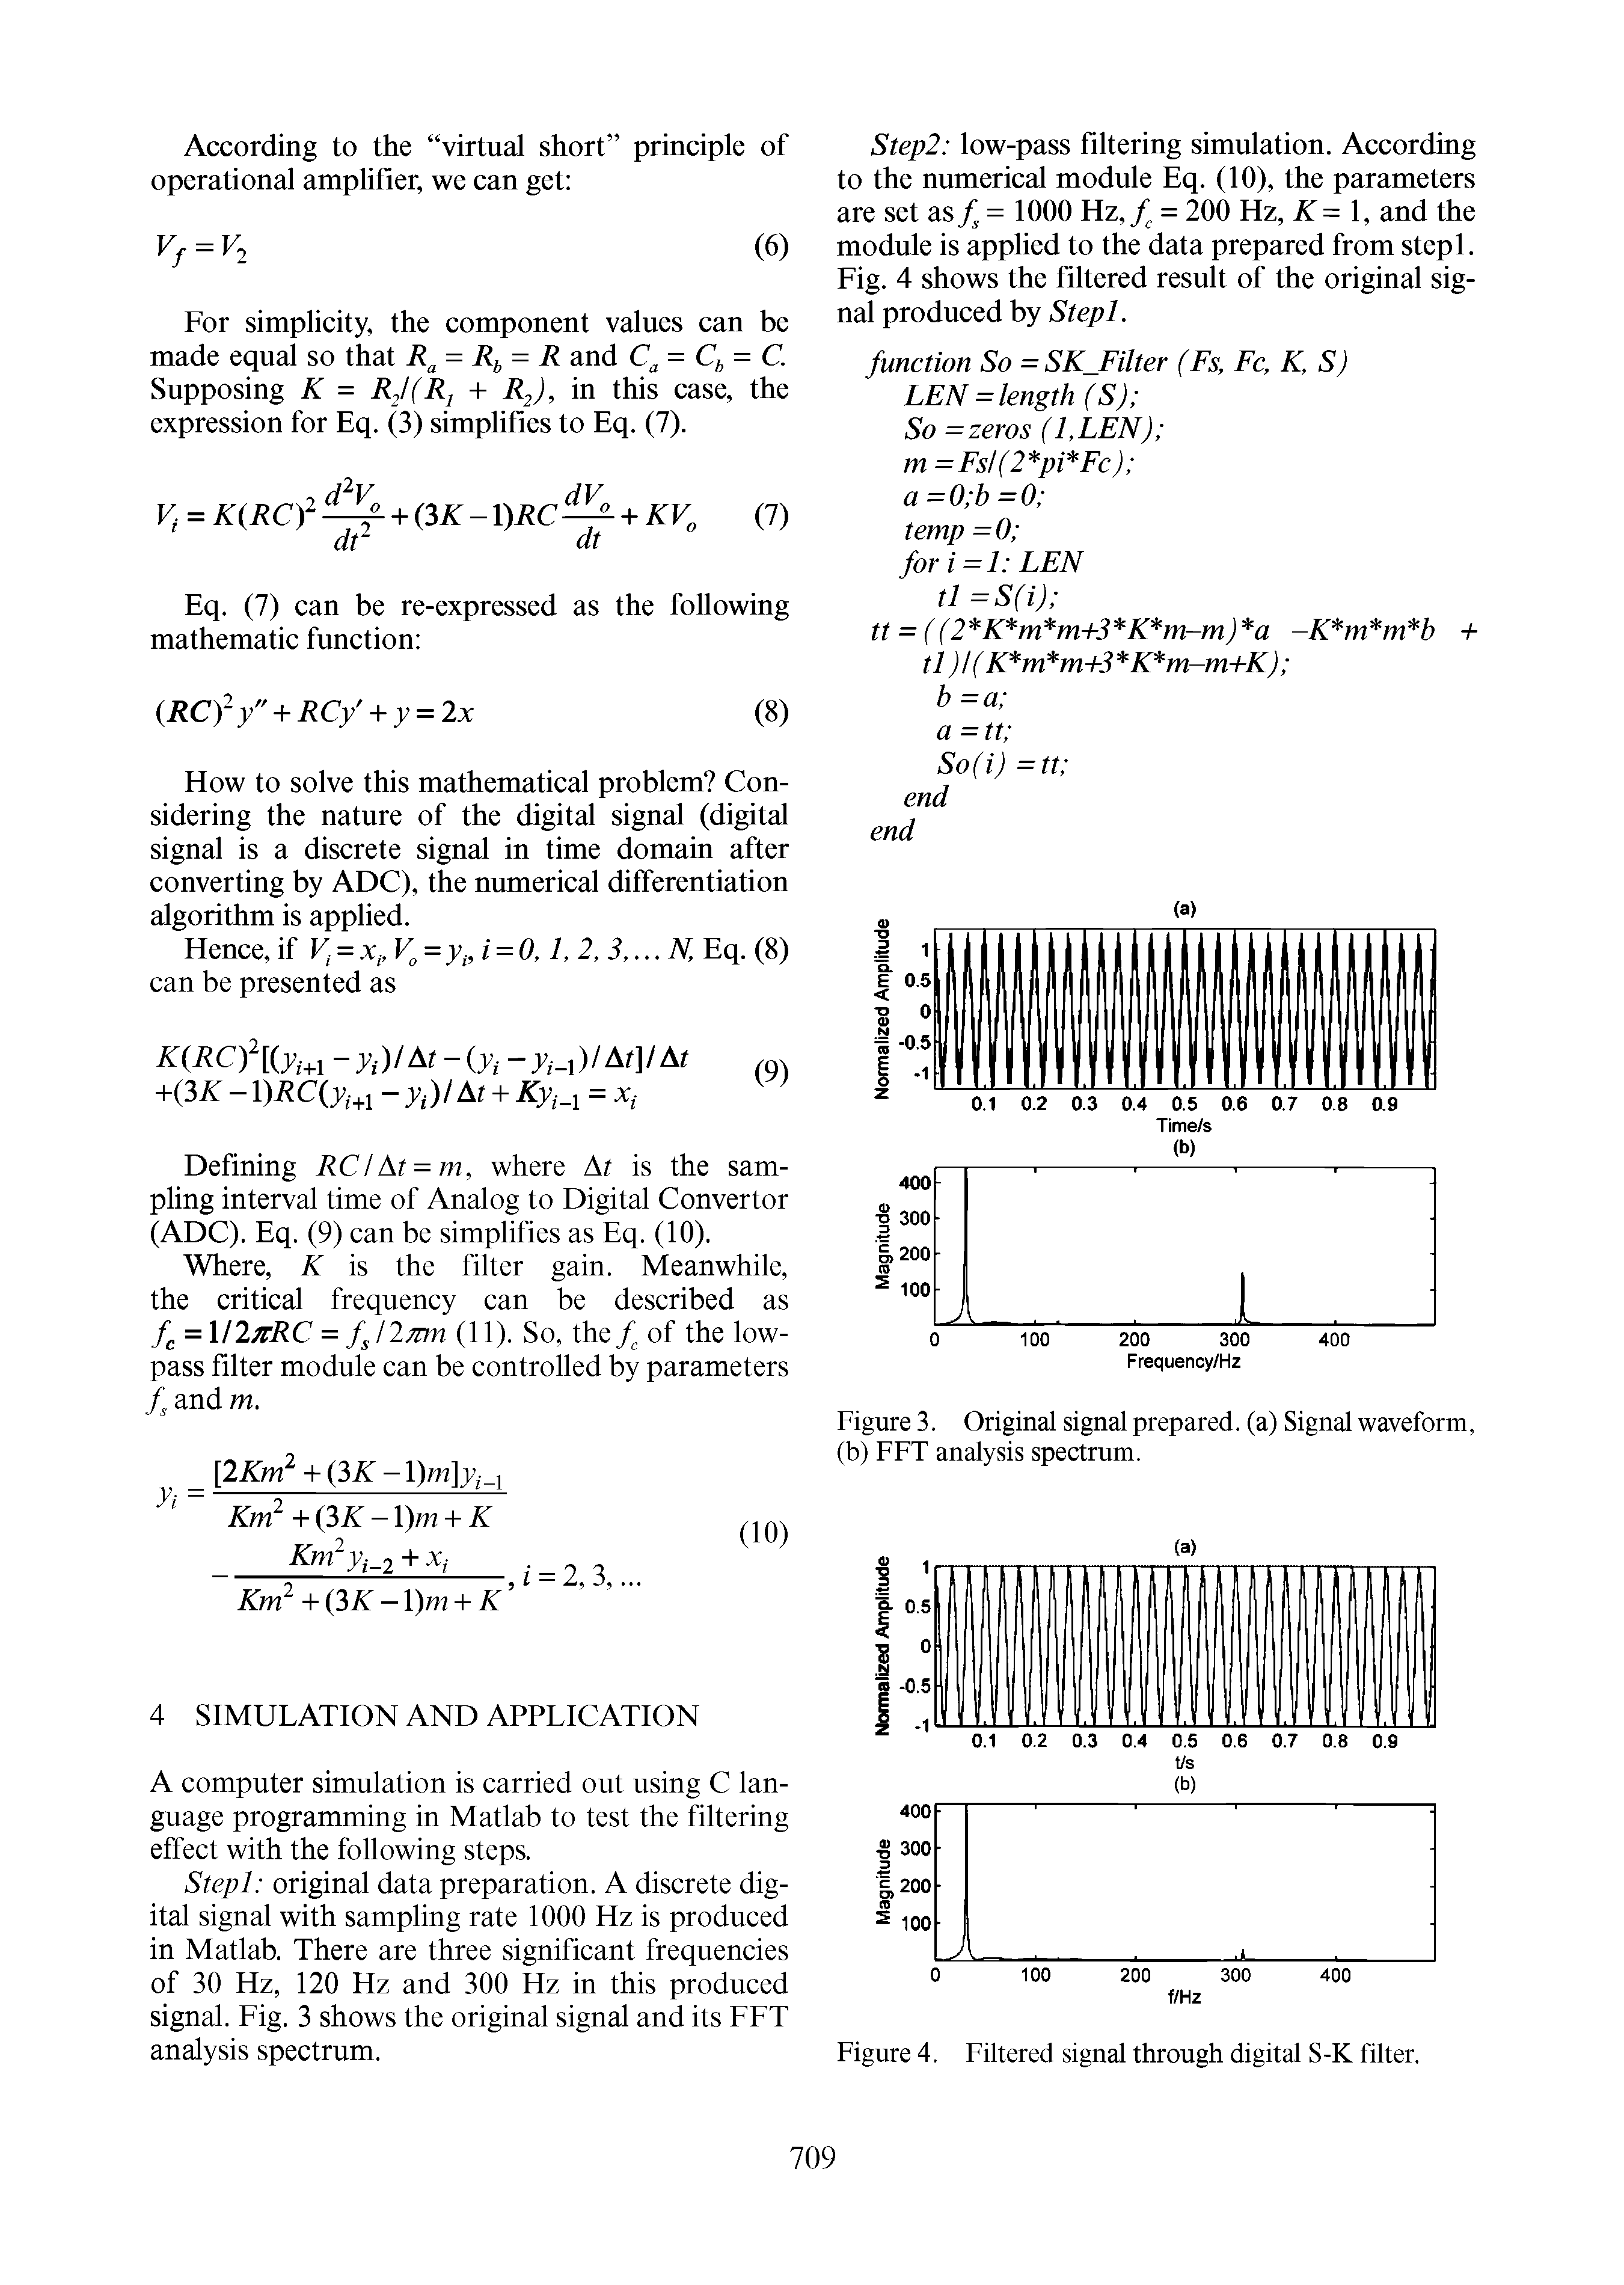 Figure 3. Original signal prepared, (a) Signal waveform, (b) FFT analysis spectrum.